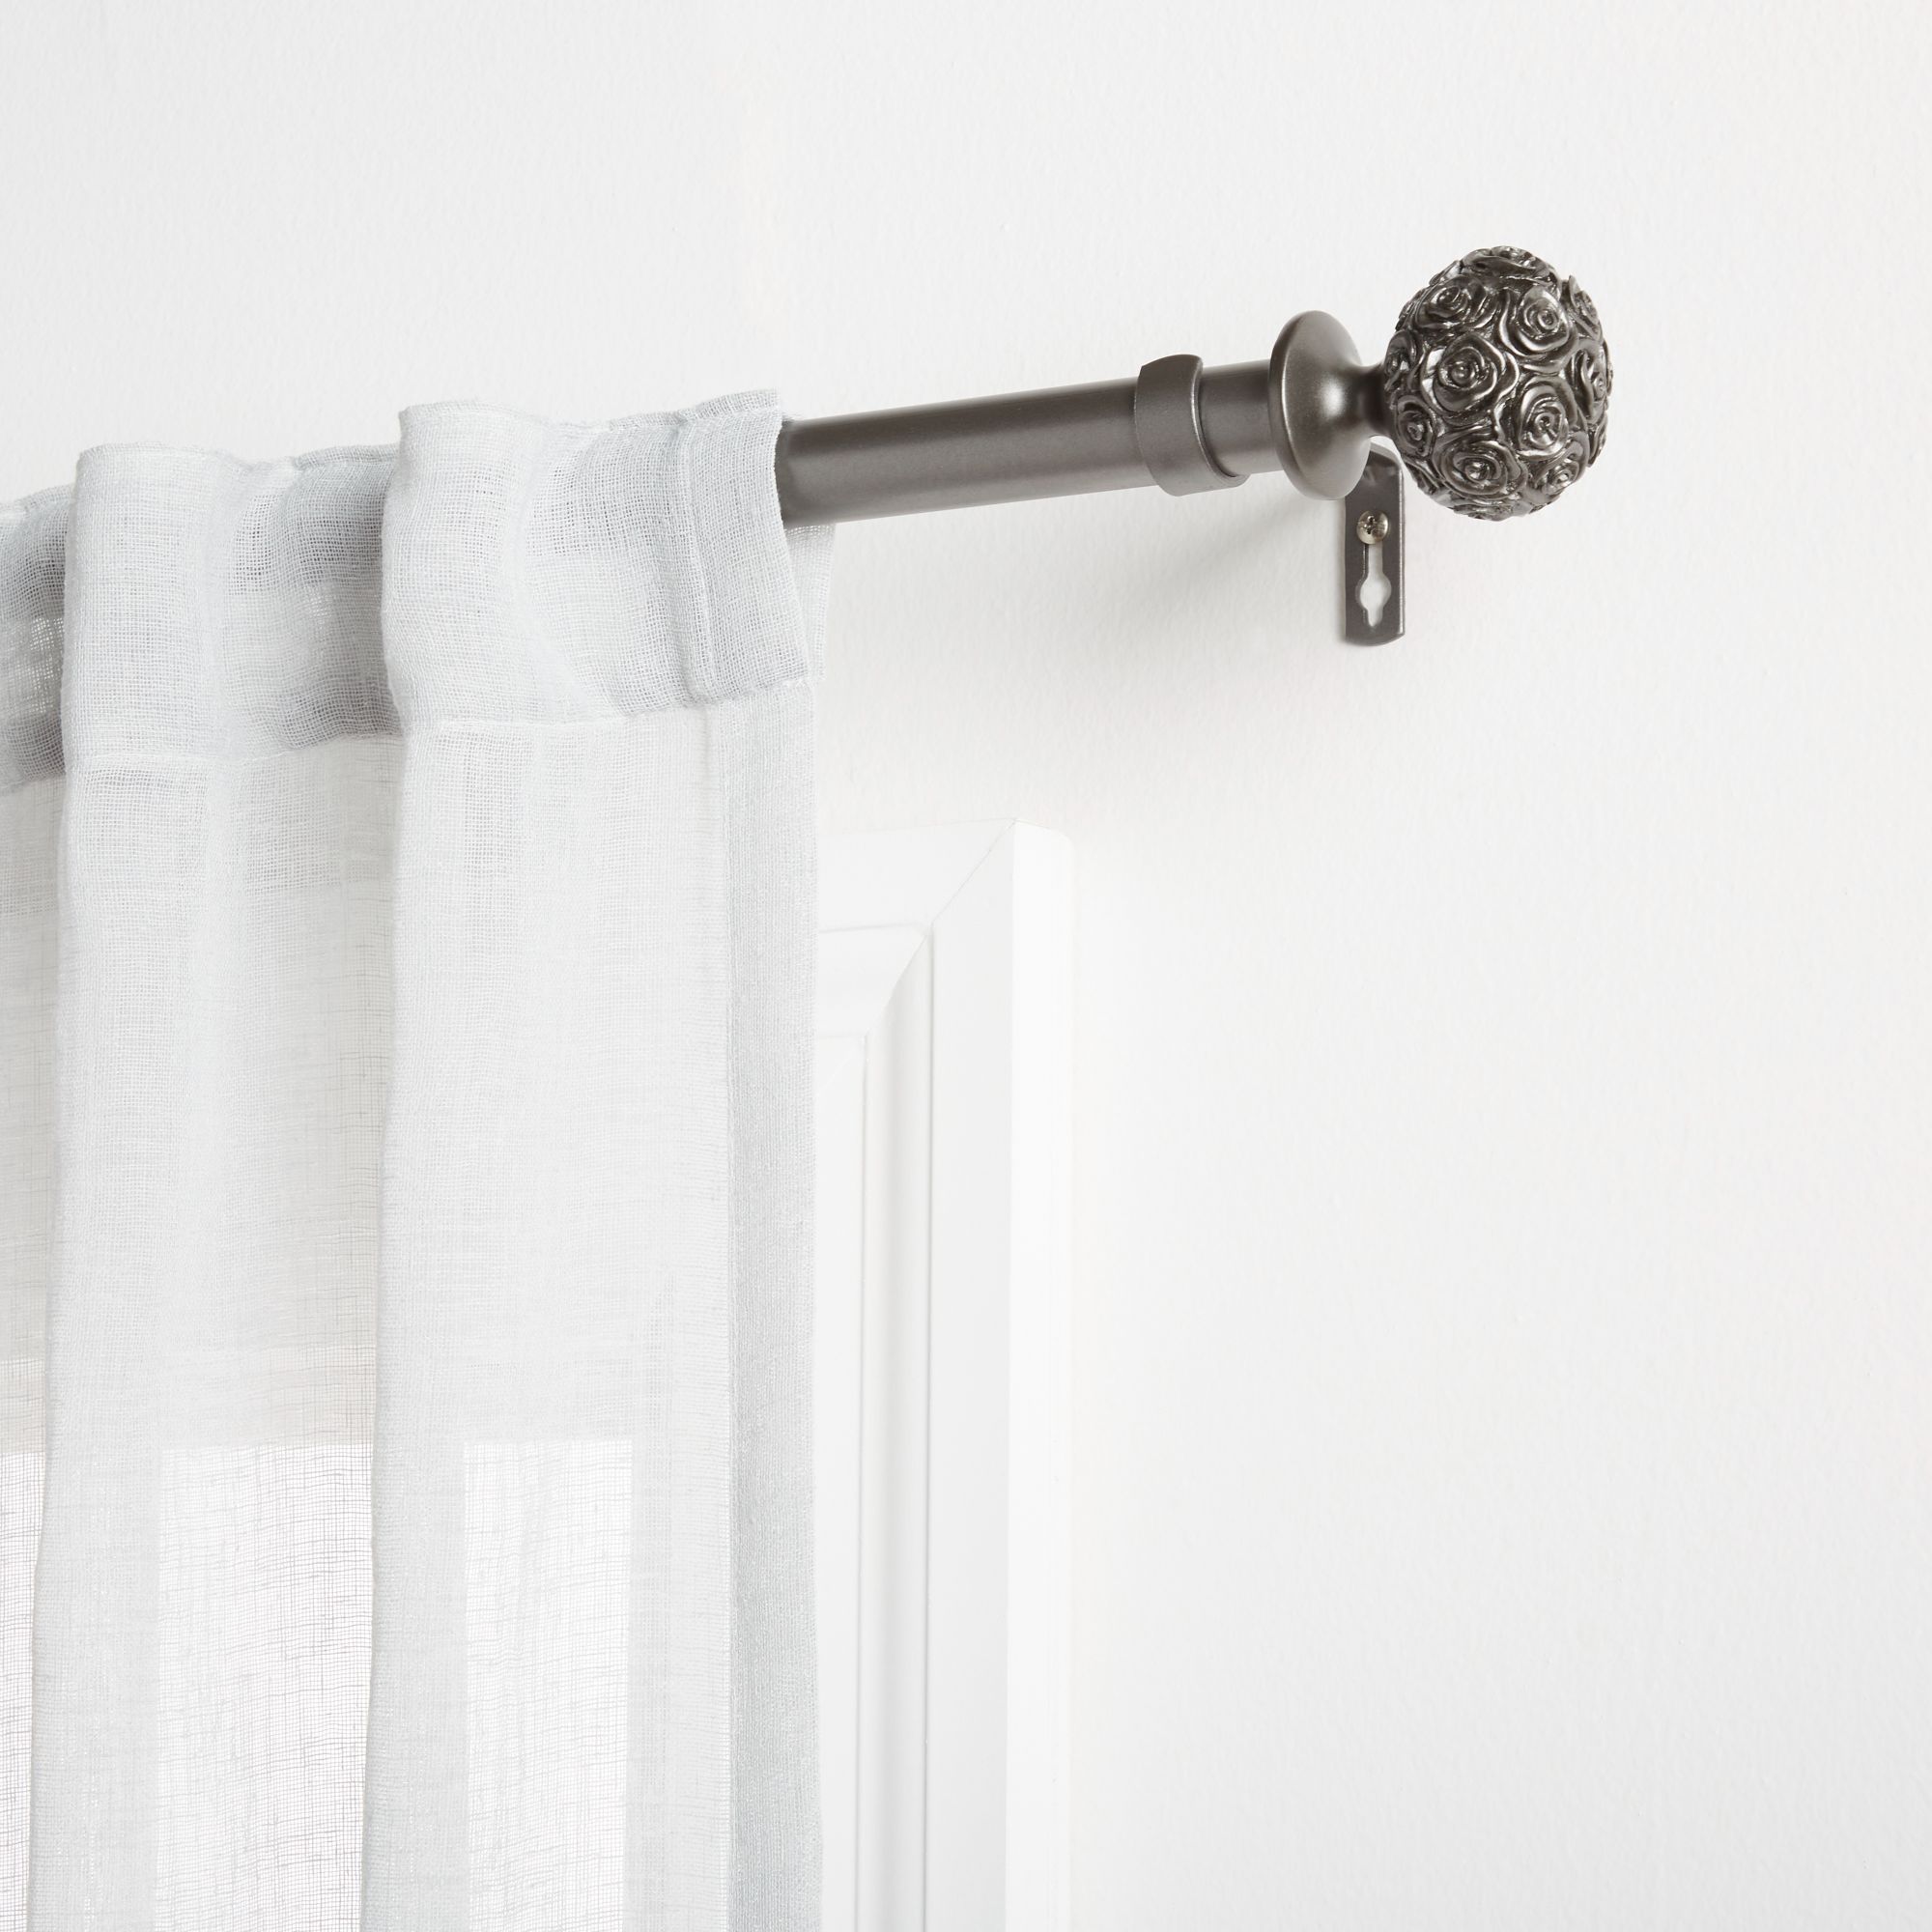 Shower Window Curtain Clips Revel Resin Clip Rings in Black Set of 7 